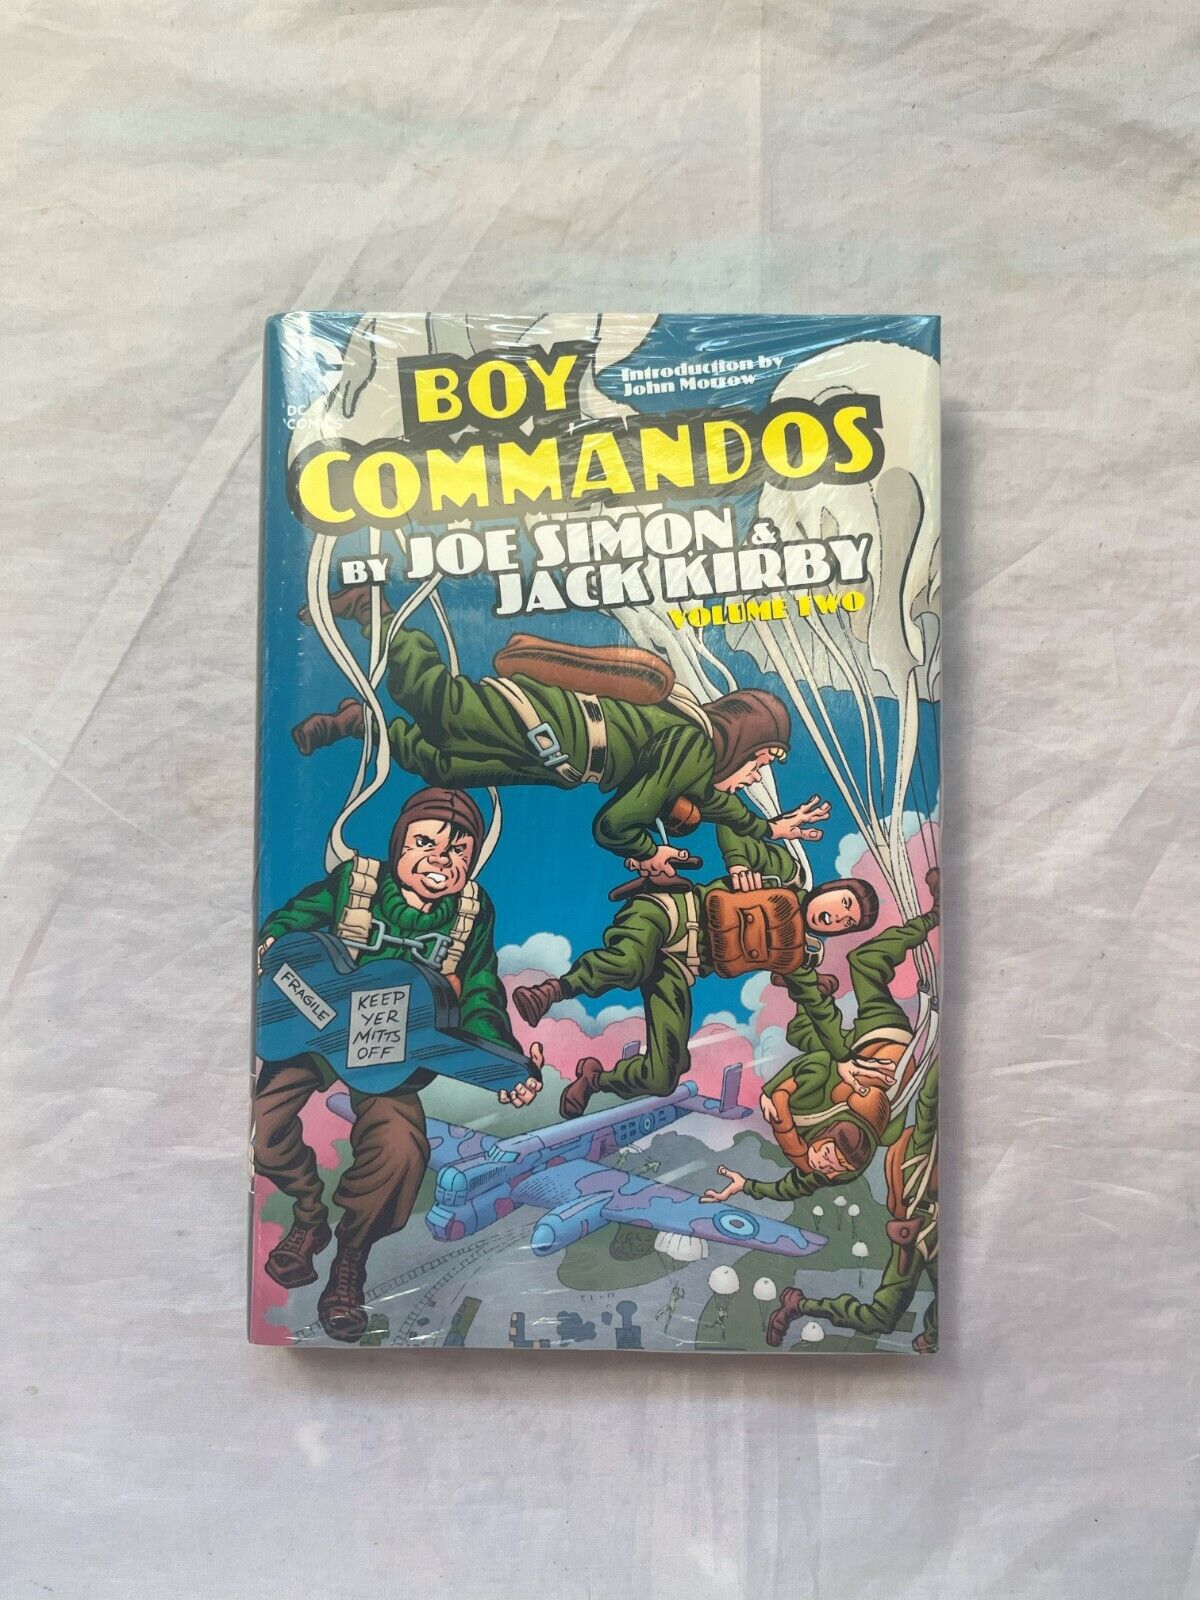 Boy Commandos By Joe Simon And Jack Kirby Vol. 2 (DC)